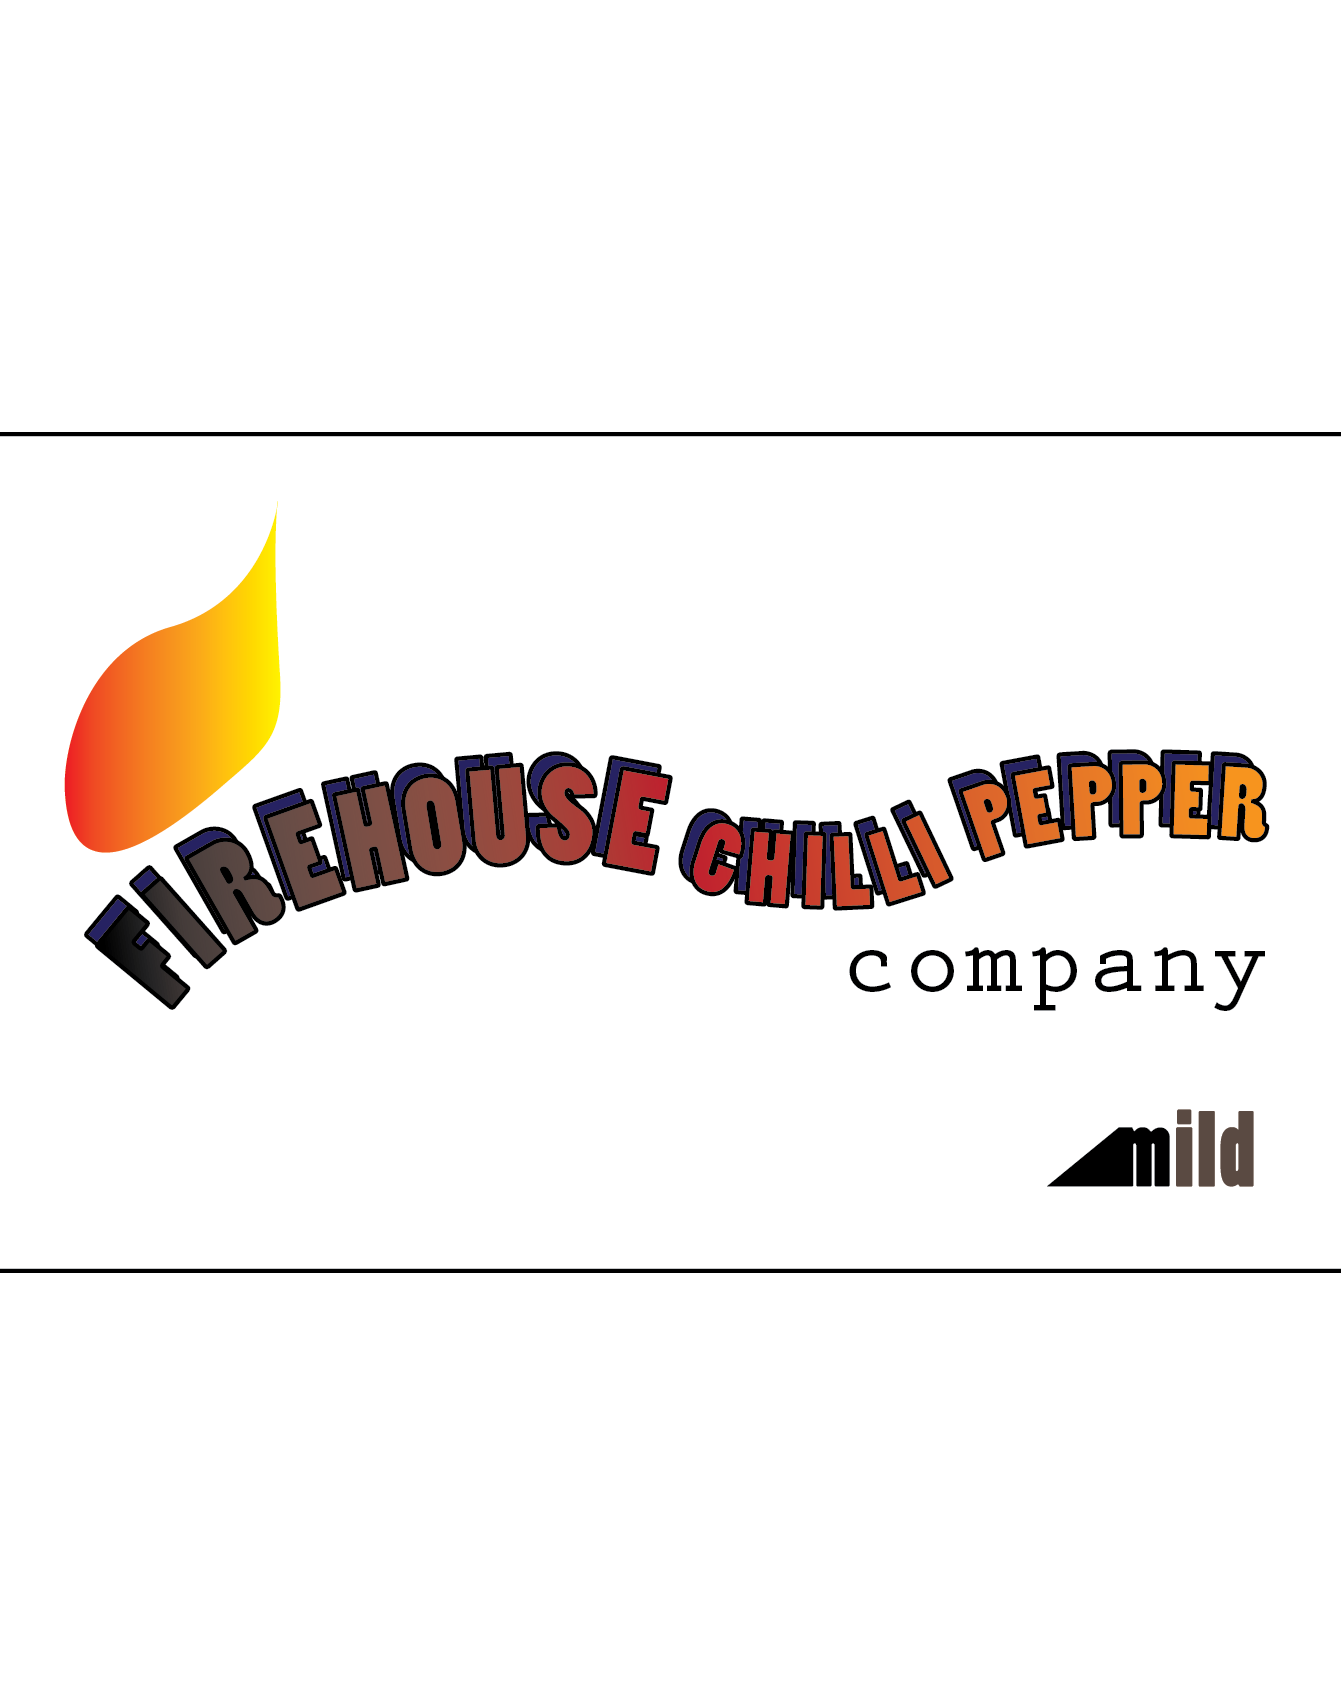 Firehouse Chilli Pepper Company Logo Image